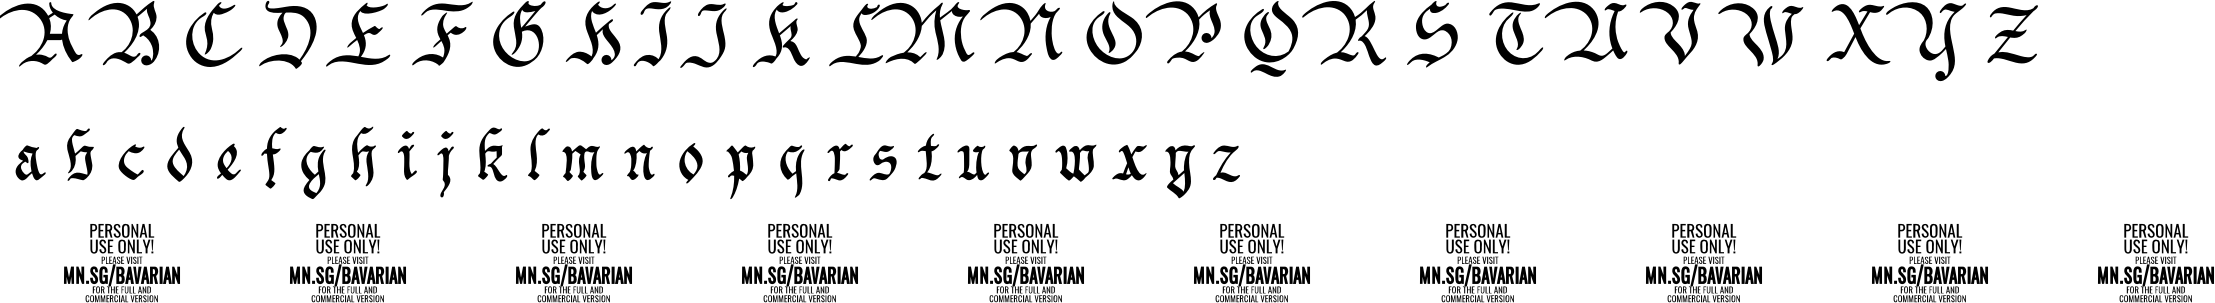 Bavarian Crown Font Character Map